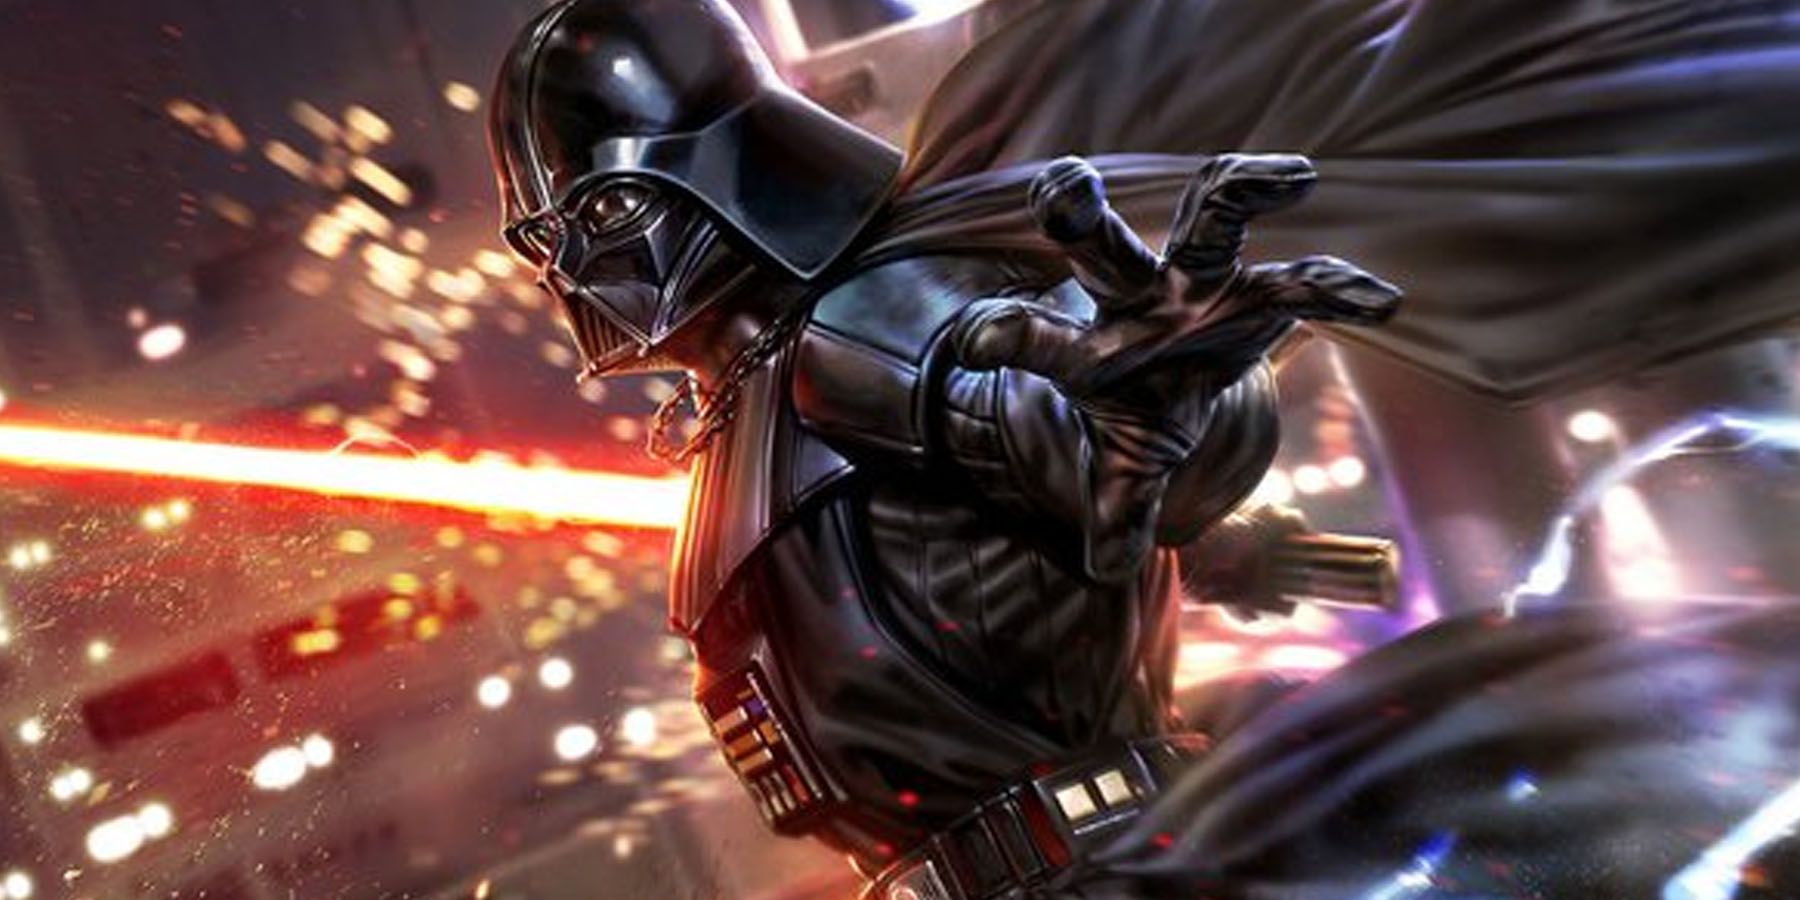 Darth Vader using his telekinesis